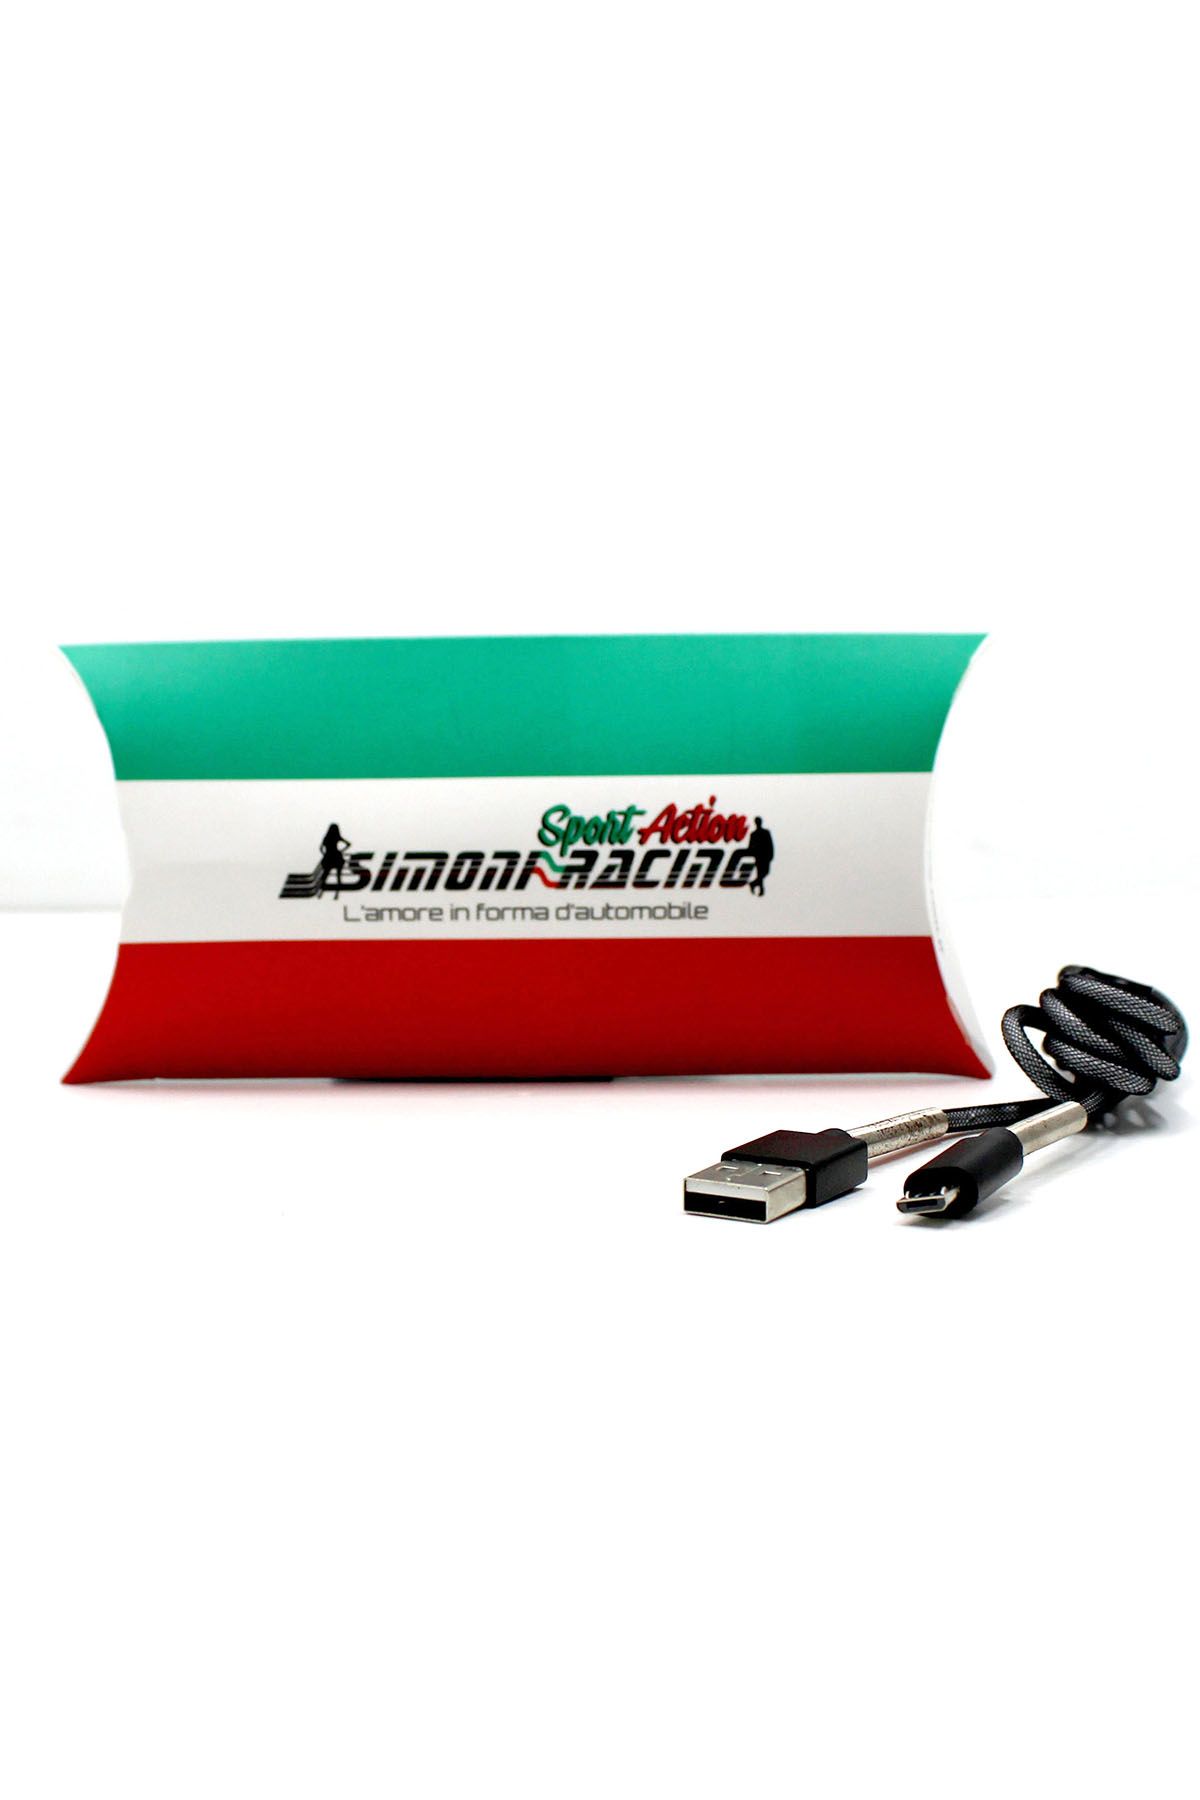 Simoni Racing Galio Cavo Di Ricarica Usb - Android Şarj Kablosu Yeni Jenerasyon Smn102643